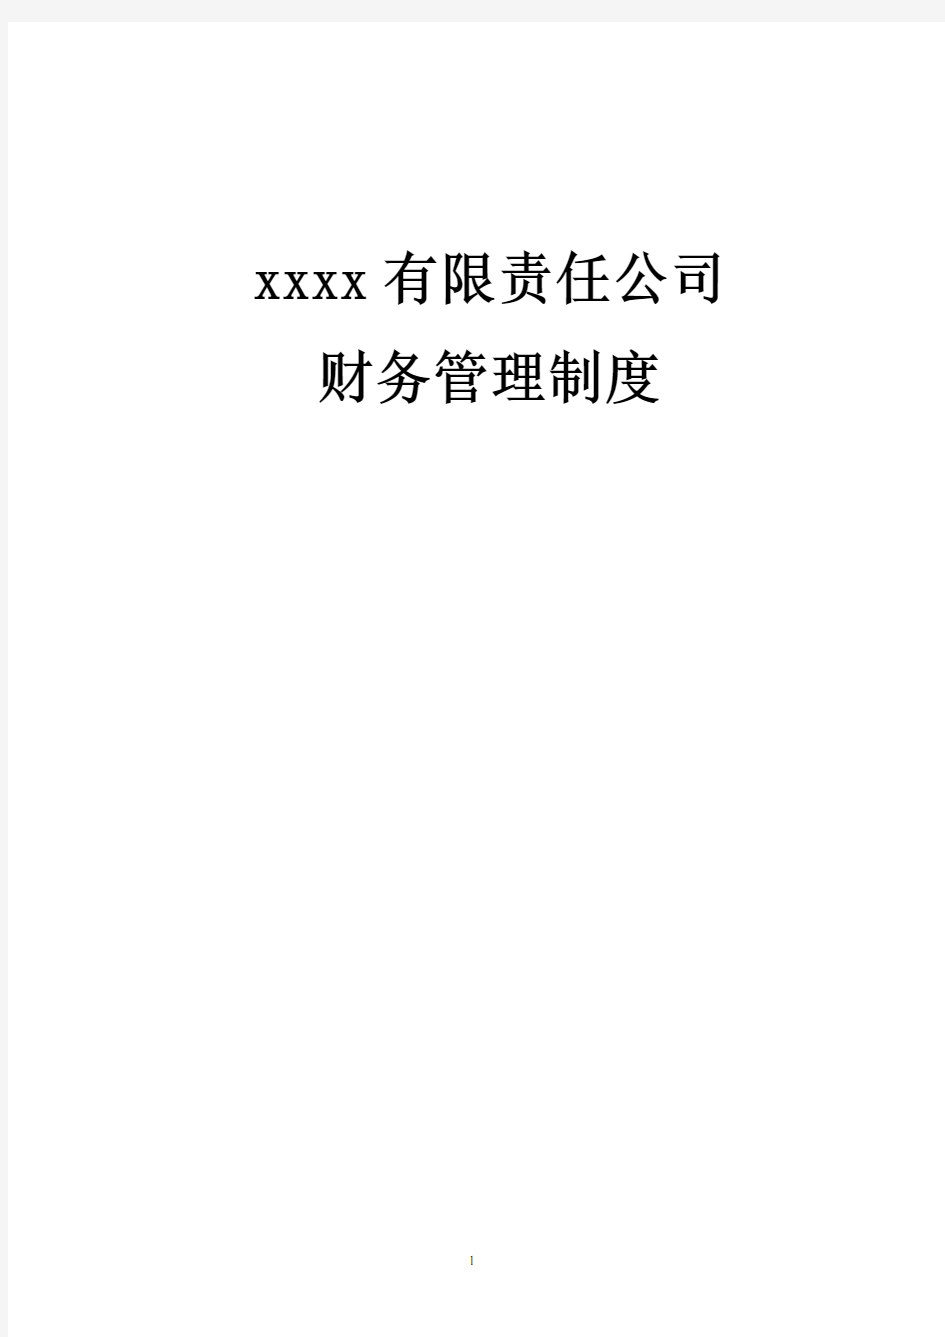 xxx公司财务管理制度-新.doc